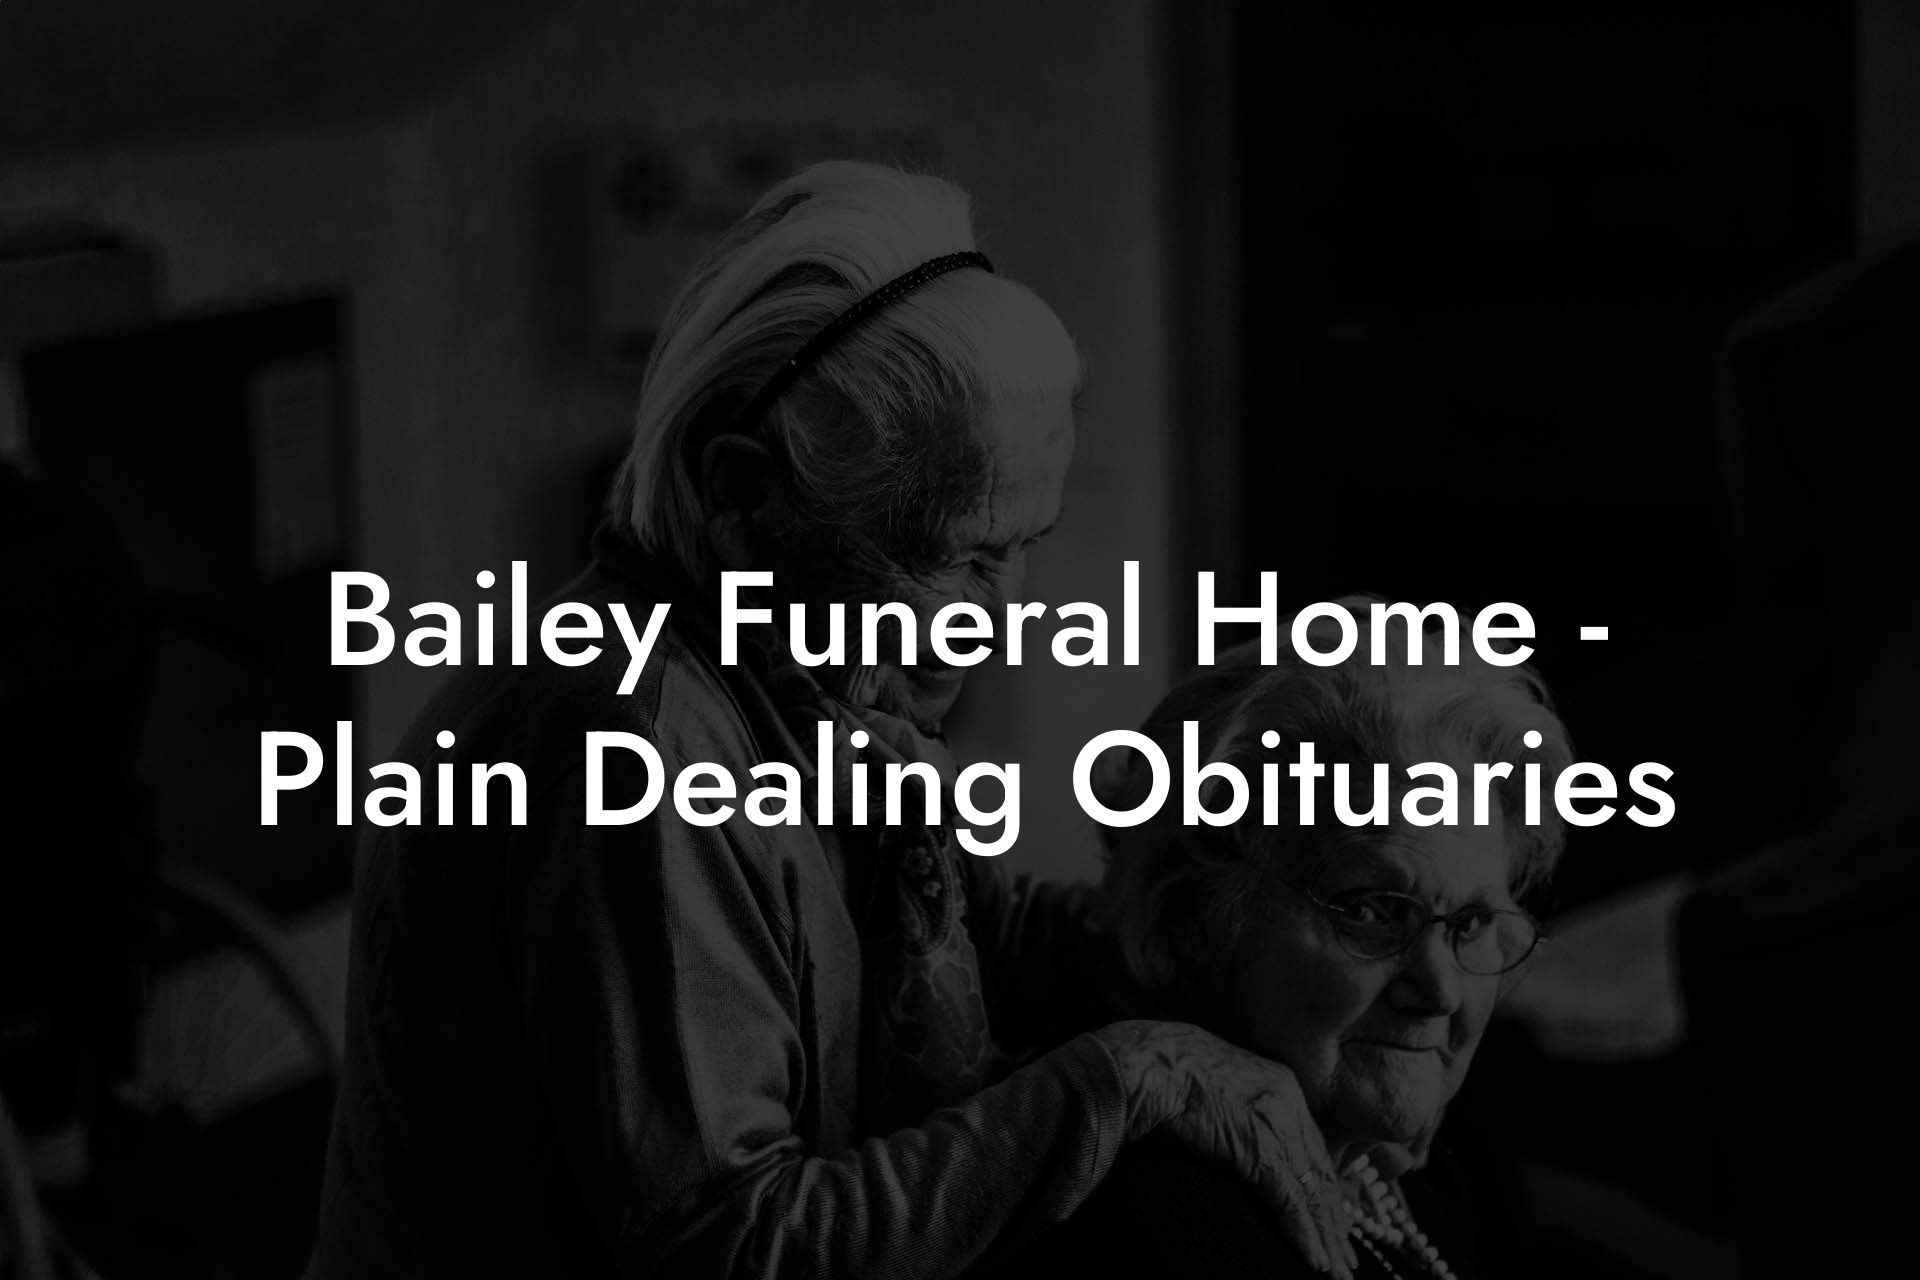 Bailey Funeral Home - Plain Dealing Obituaries